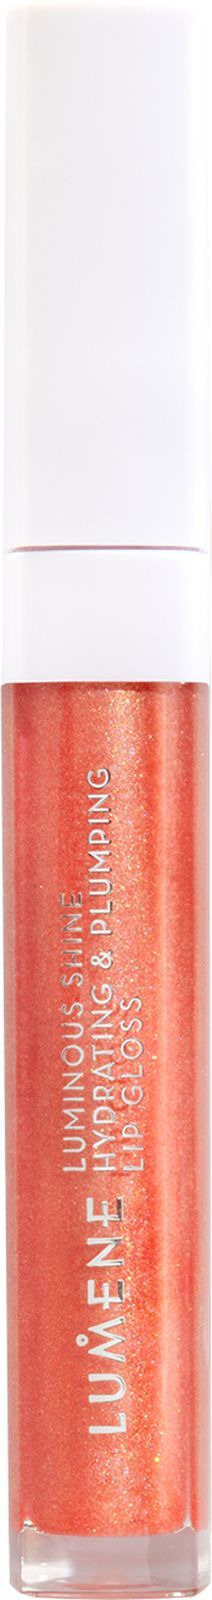 Lumene Luminous Shine Hydrating Plumping Lip Gloss